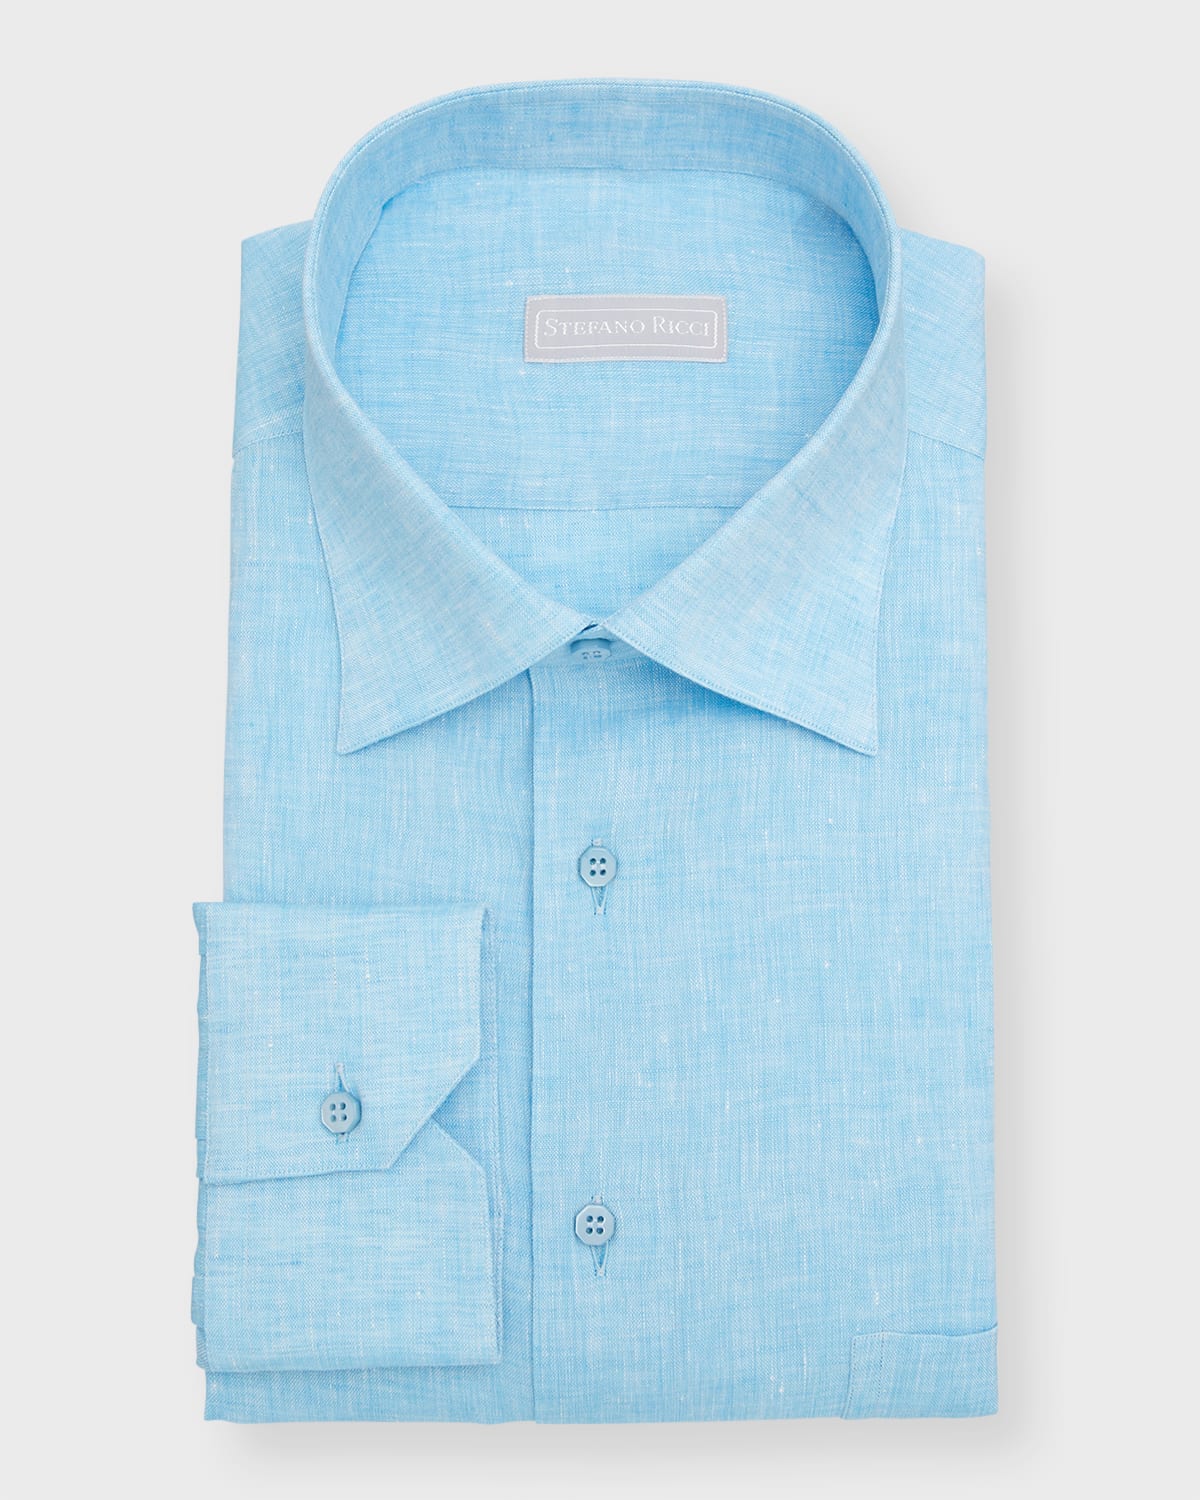 Stefano Ricci Men's Linen Dress Shirt In Turquoise